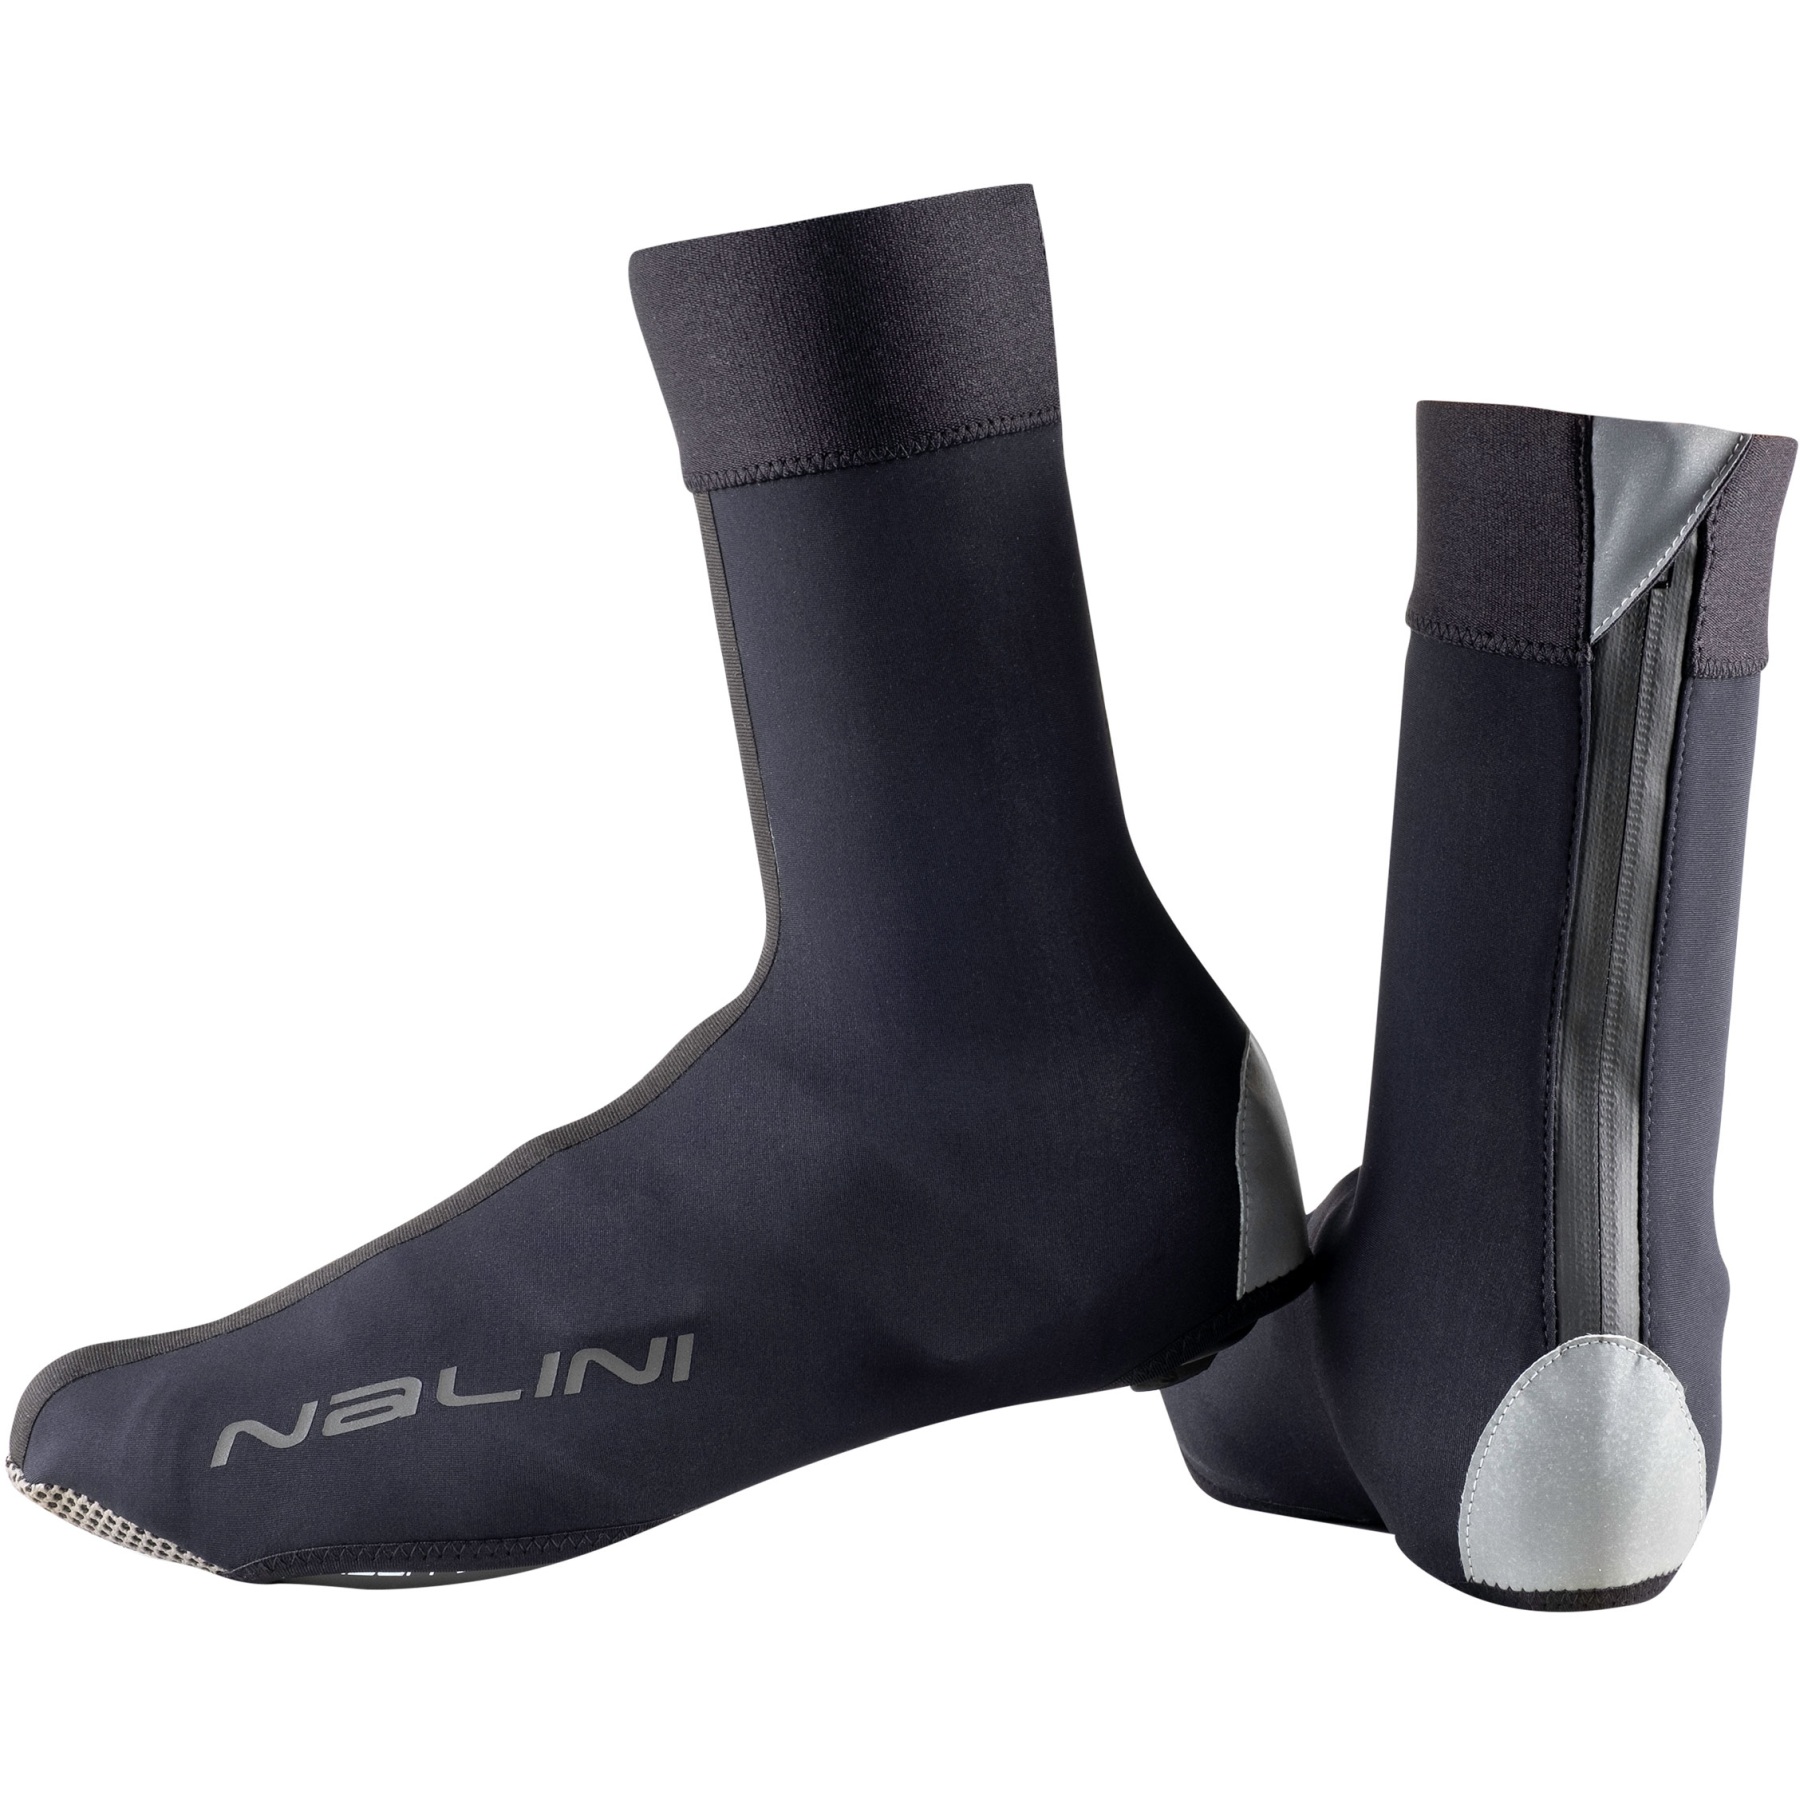 Productfoto van Nalini B0W Winter Road Cover Shoes - black 4000